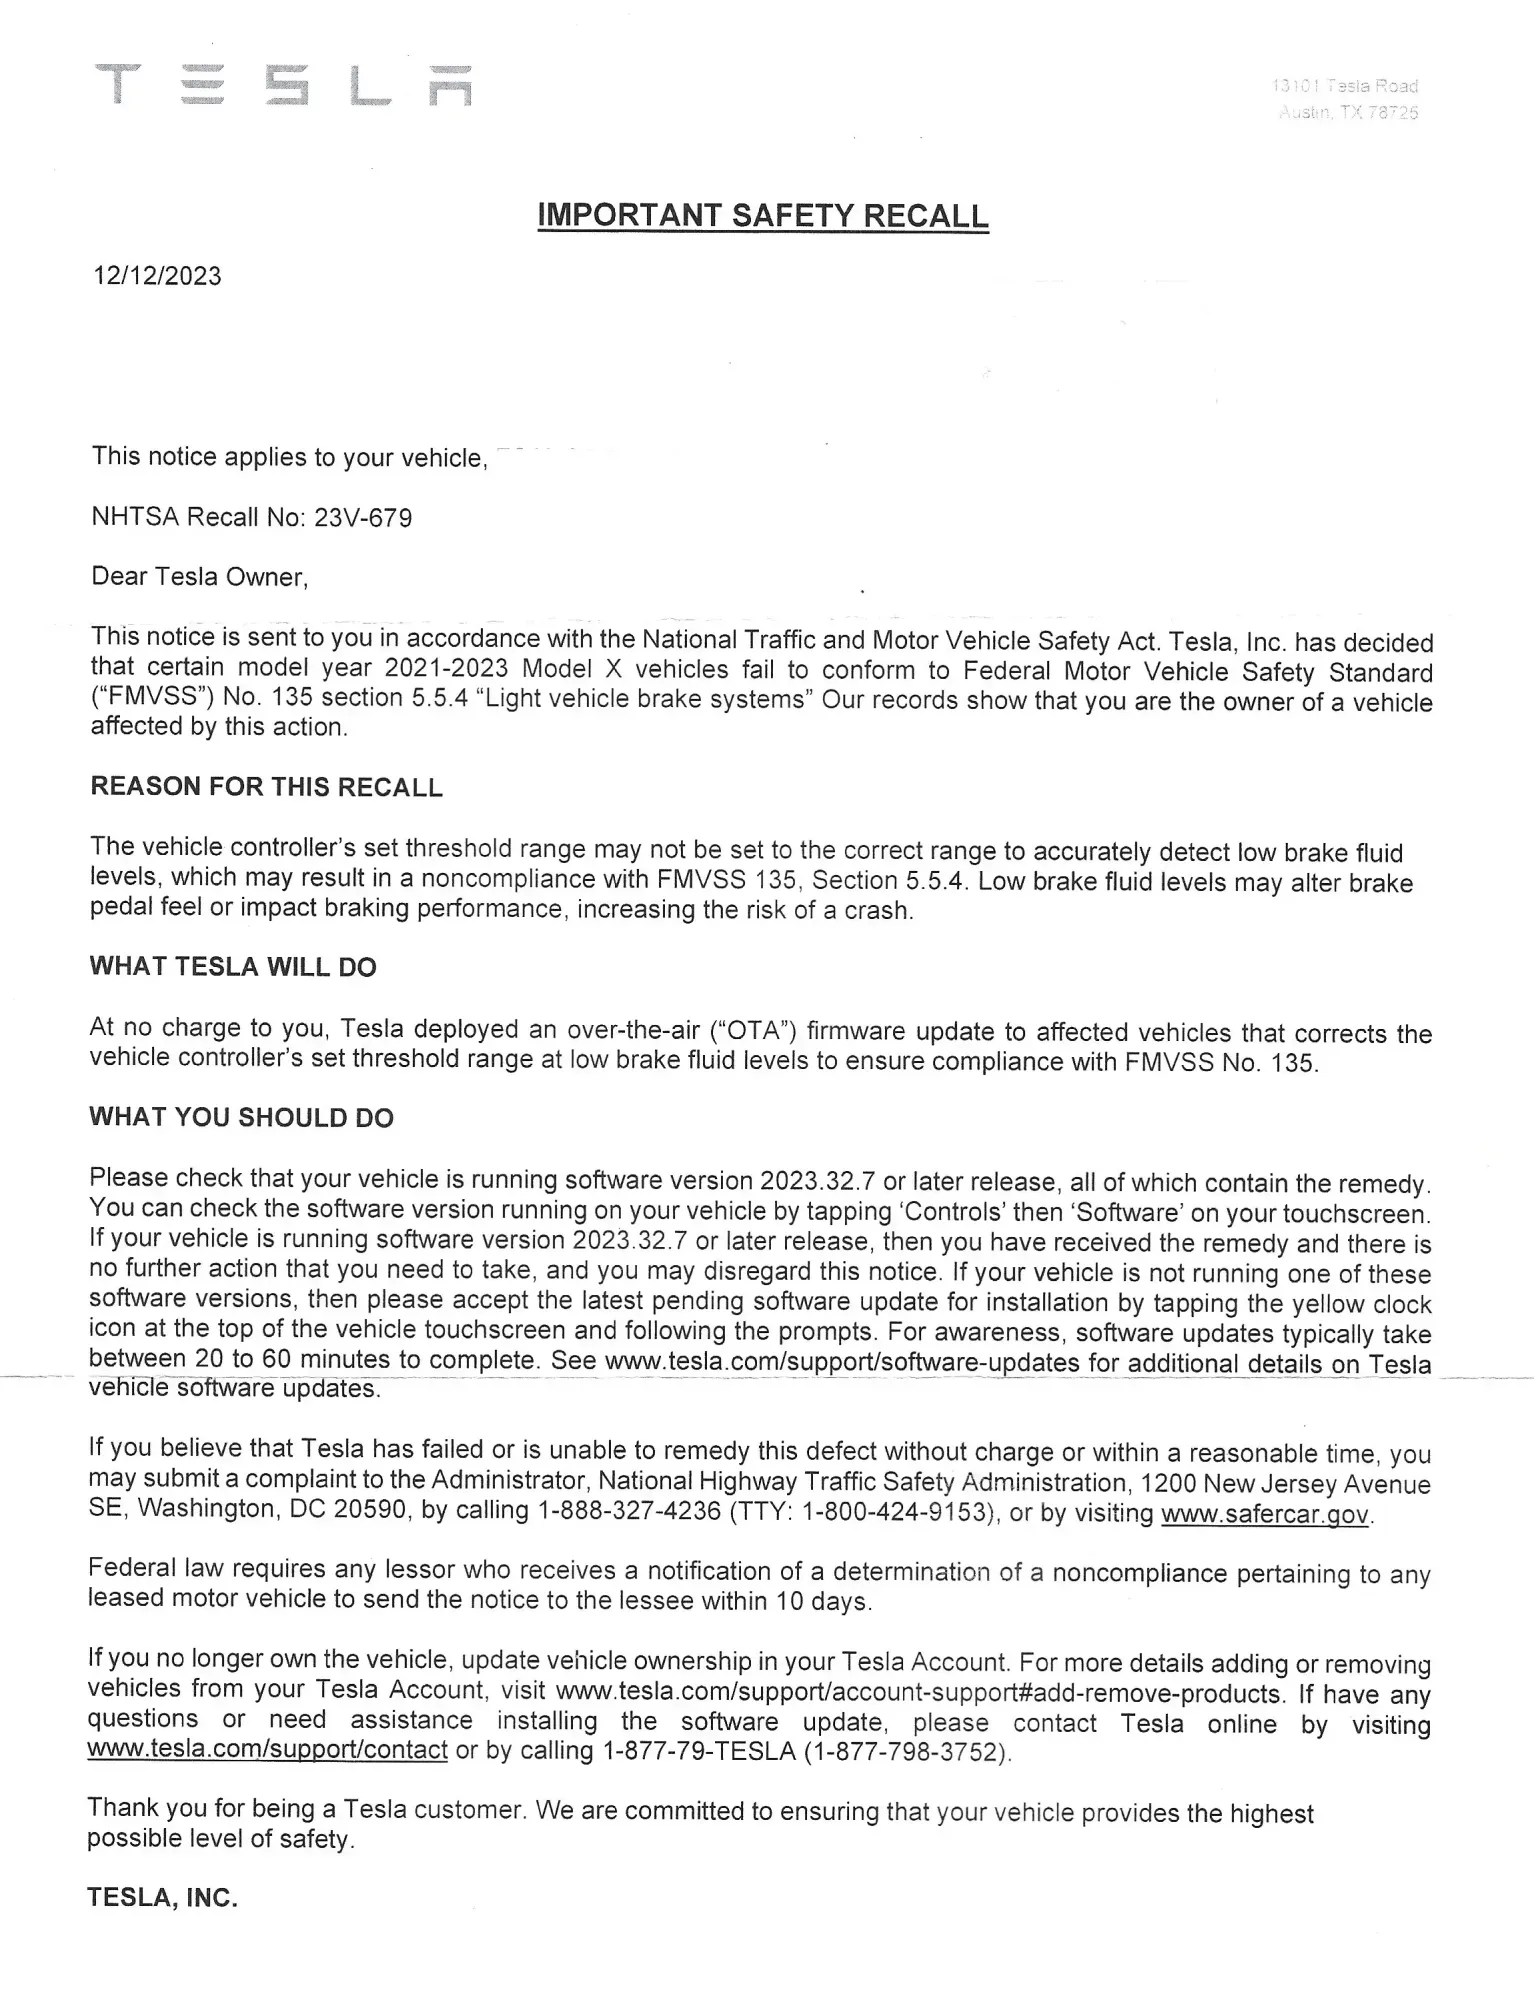 Tesla Safety Recall Notice Maile Letter Nhtsa Light Vehicle Brake Systems